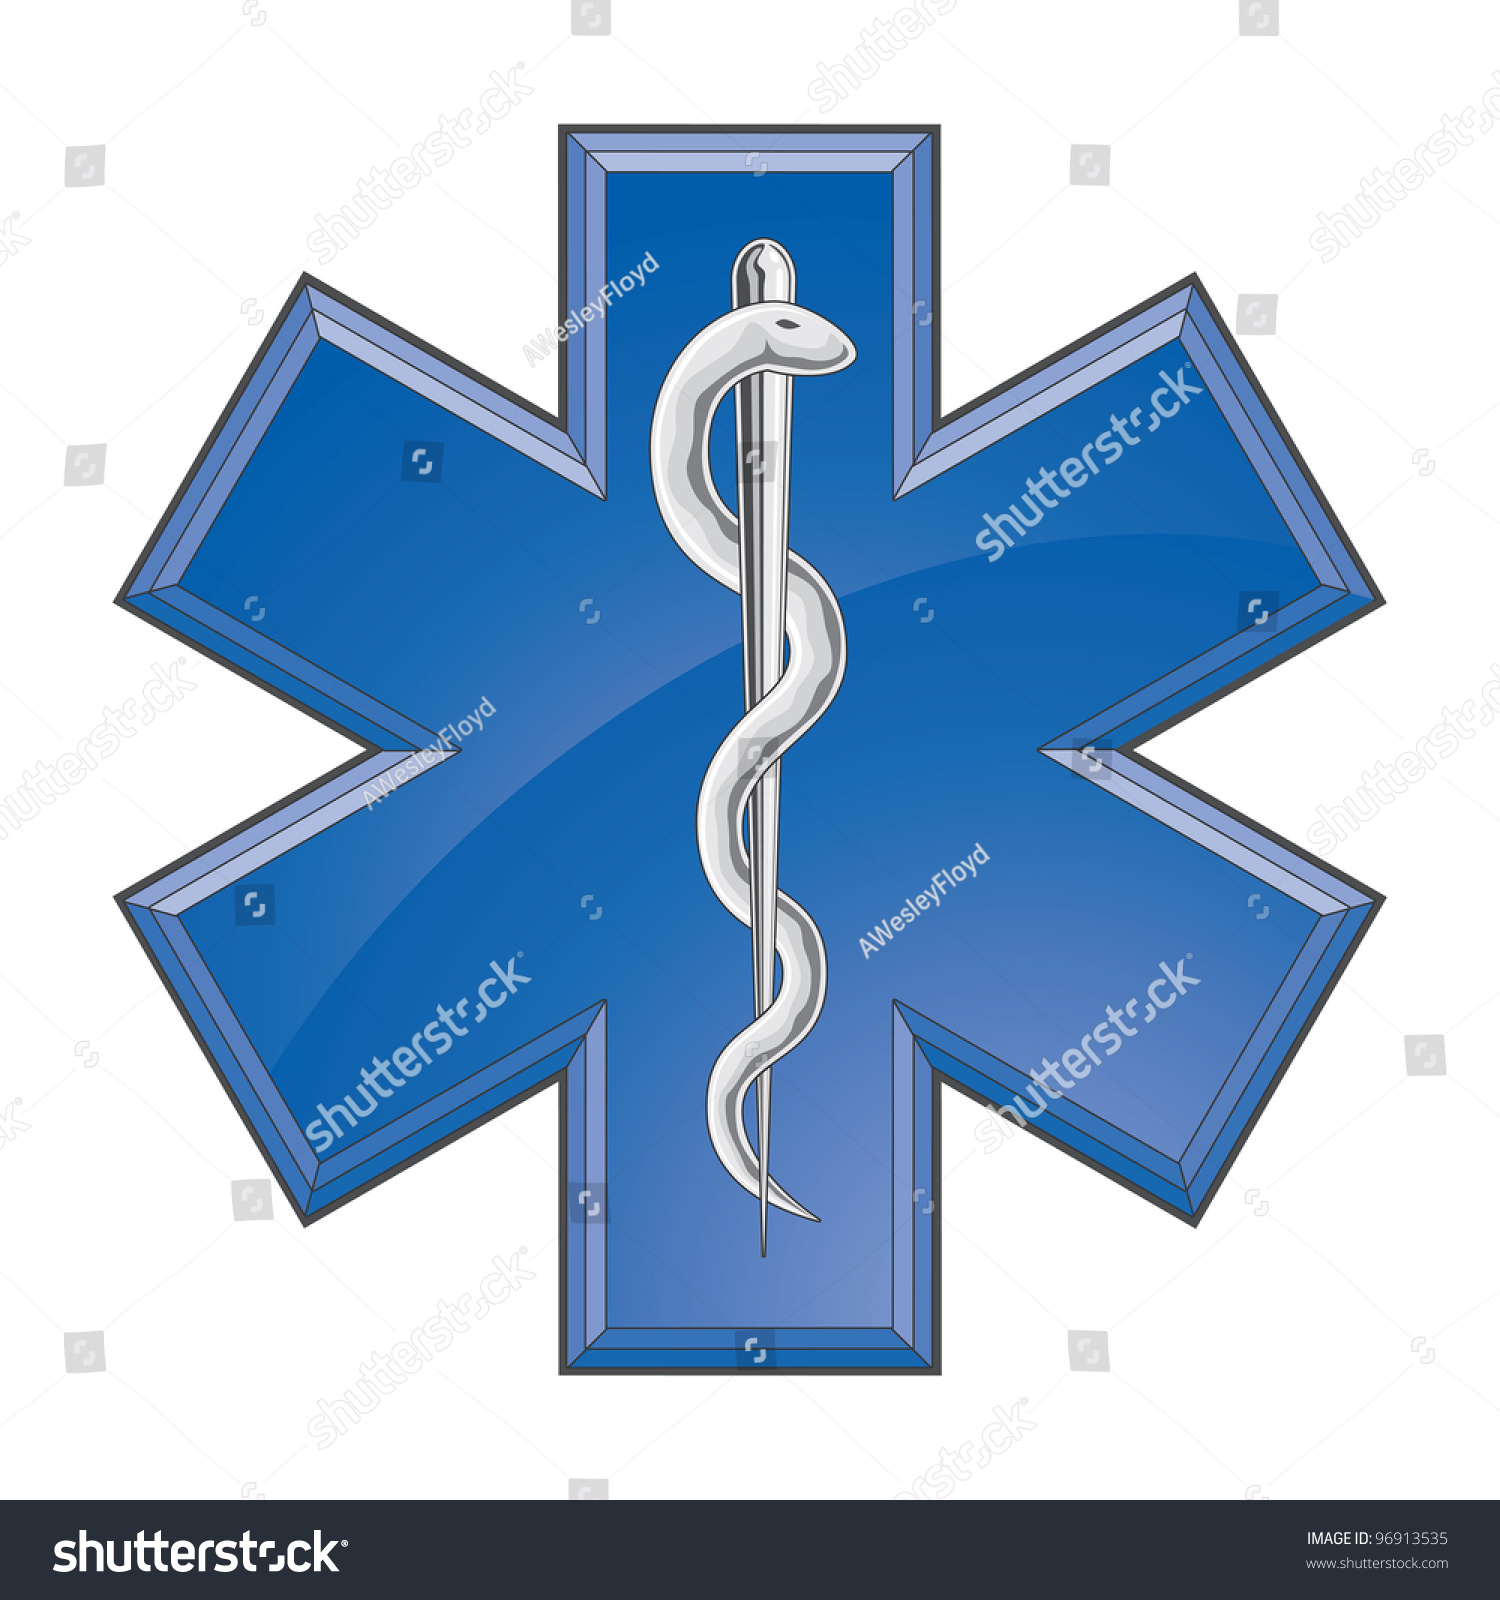 Rescue Paramedic Medical Logo Stock Photo 96913535 : Shutterstock